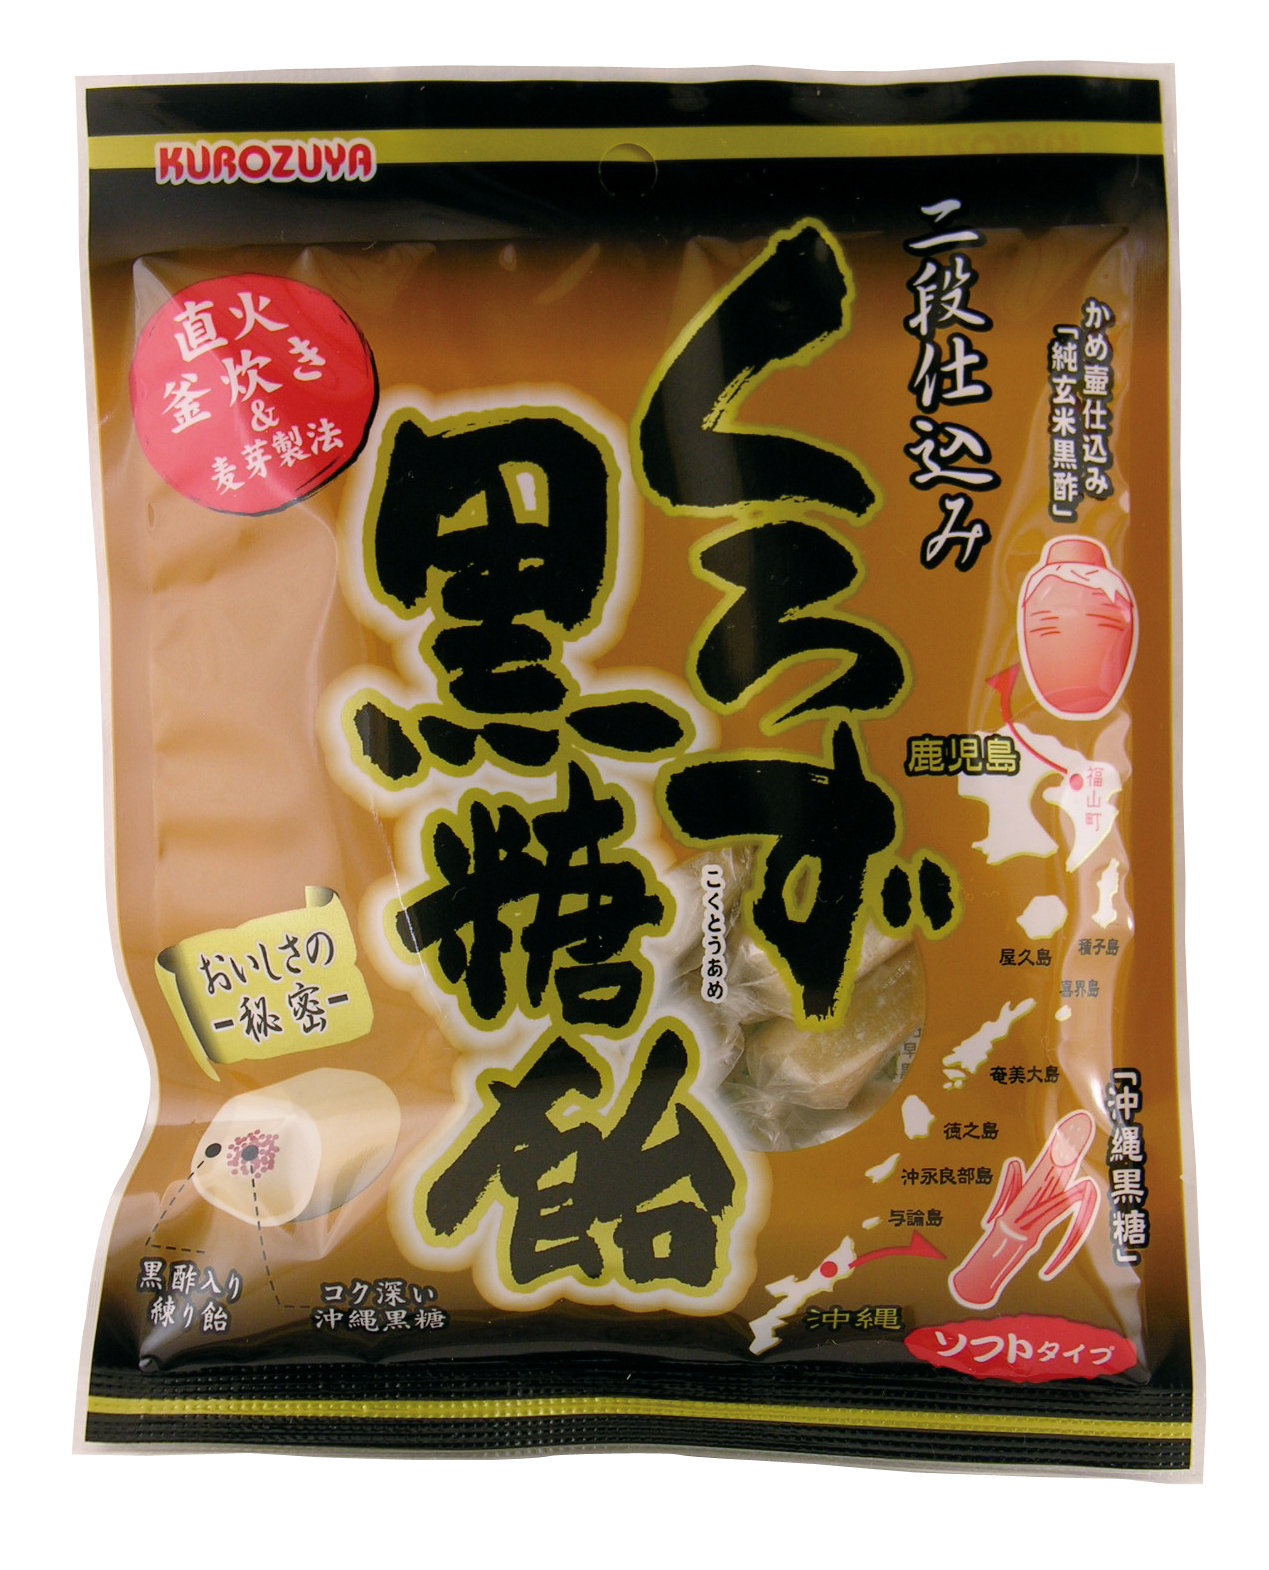 Kokutou Kurozu Candy